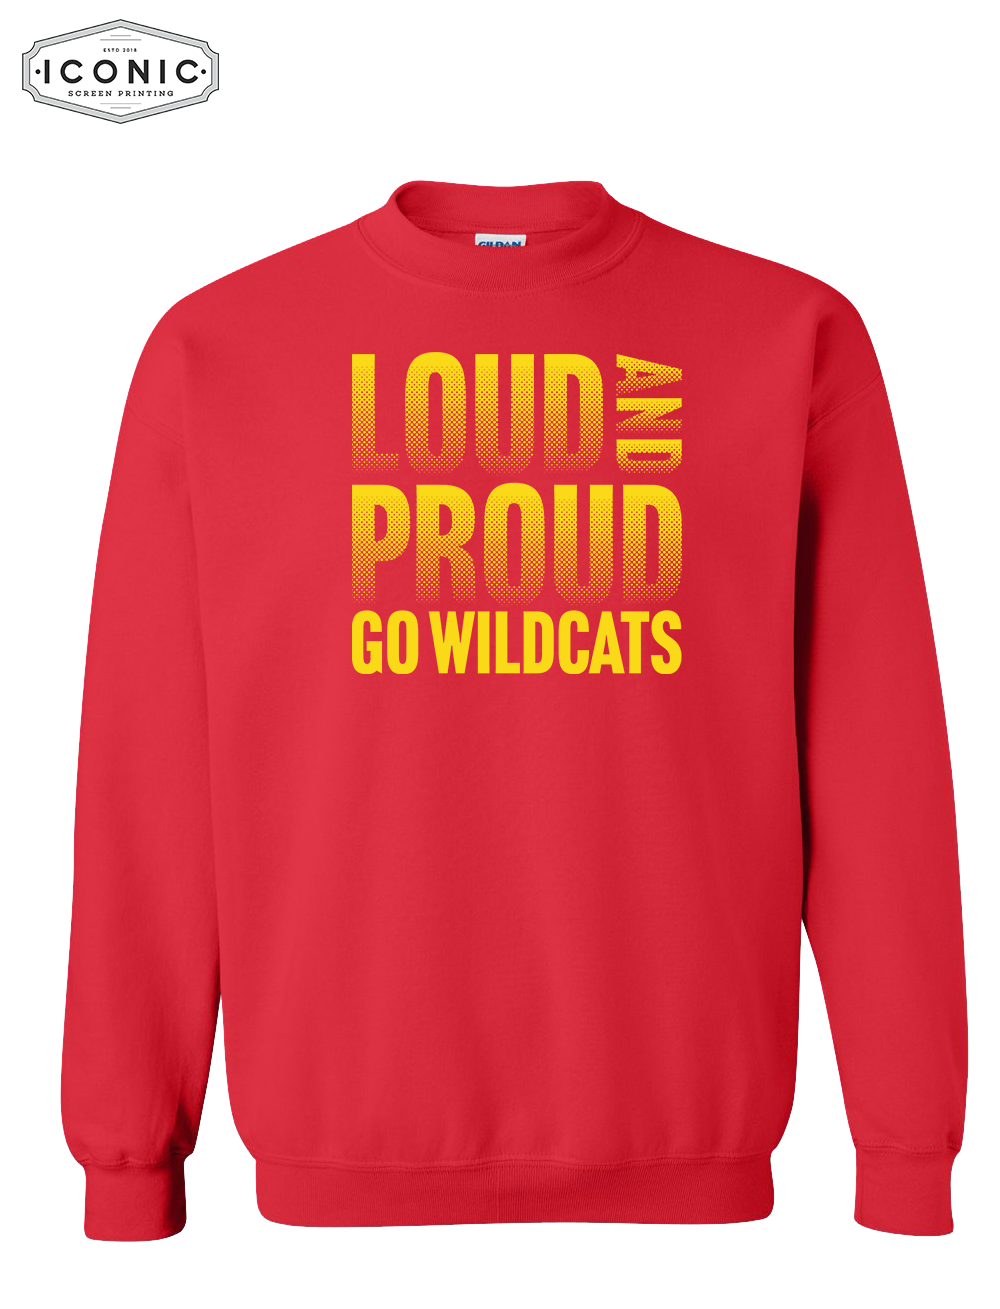 Loud And Proud - Heavy Blend Sweatshirt